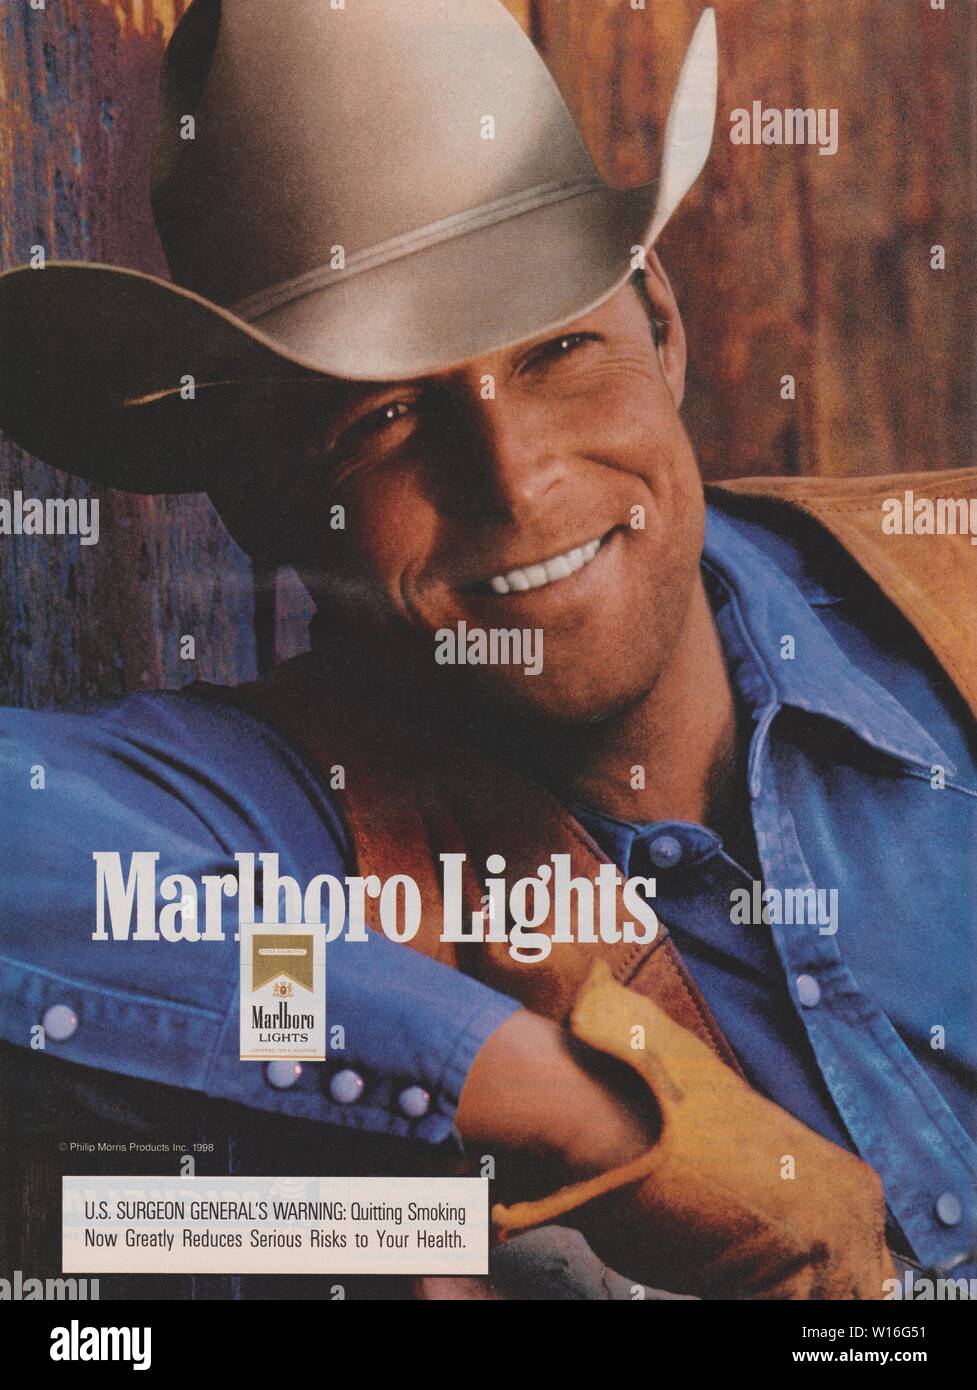 poster advertising Marlboro Lights cigarettes, magazine 1998, No slogan, creative advertisement Marlboro by Philip Morris from 1990s Stock Photo